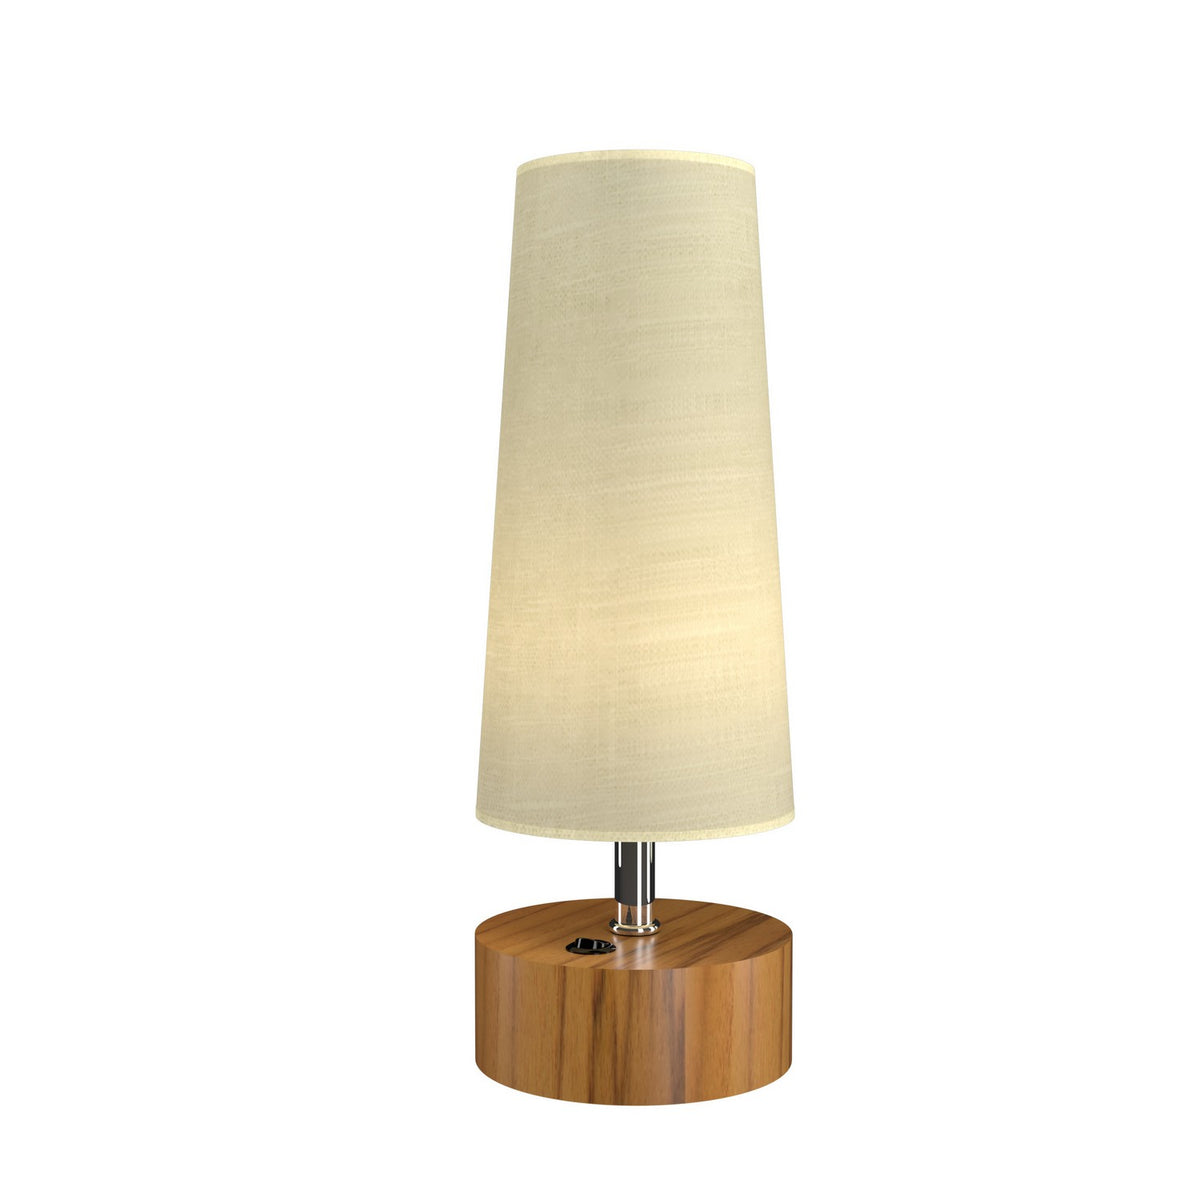 Accord Lighting - 7101.12 - LED Table Lamp - Clean - Teak